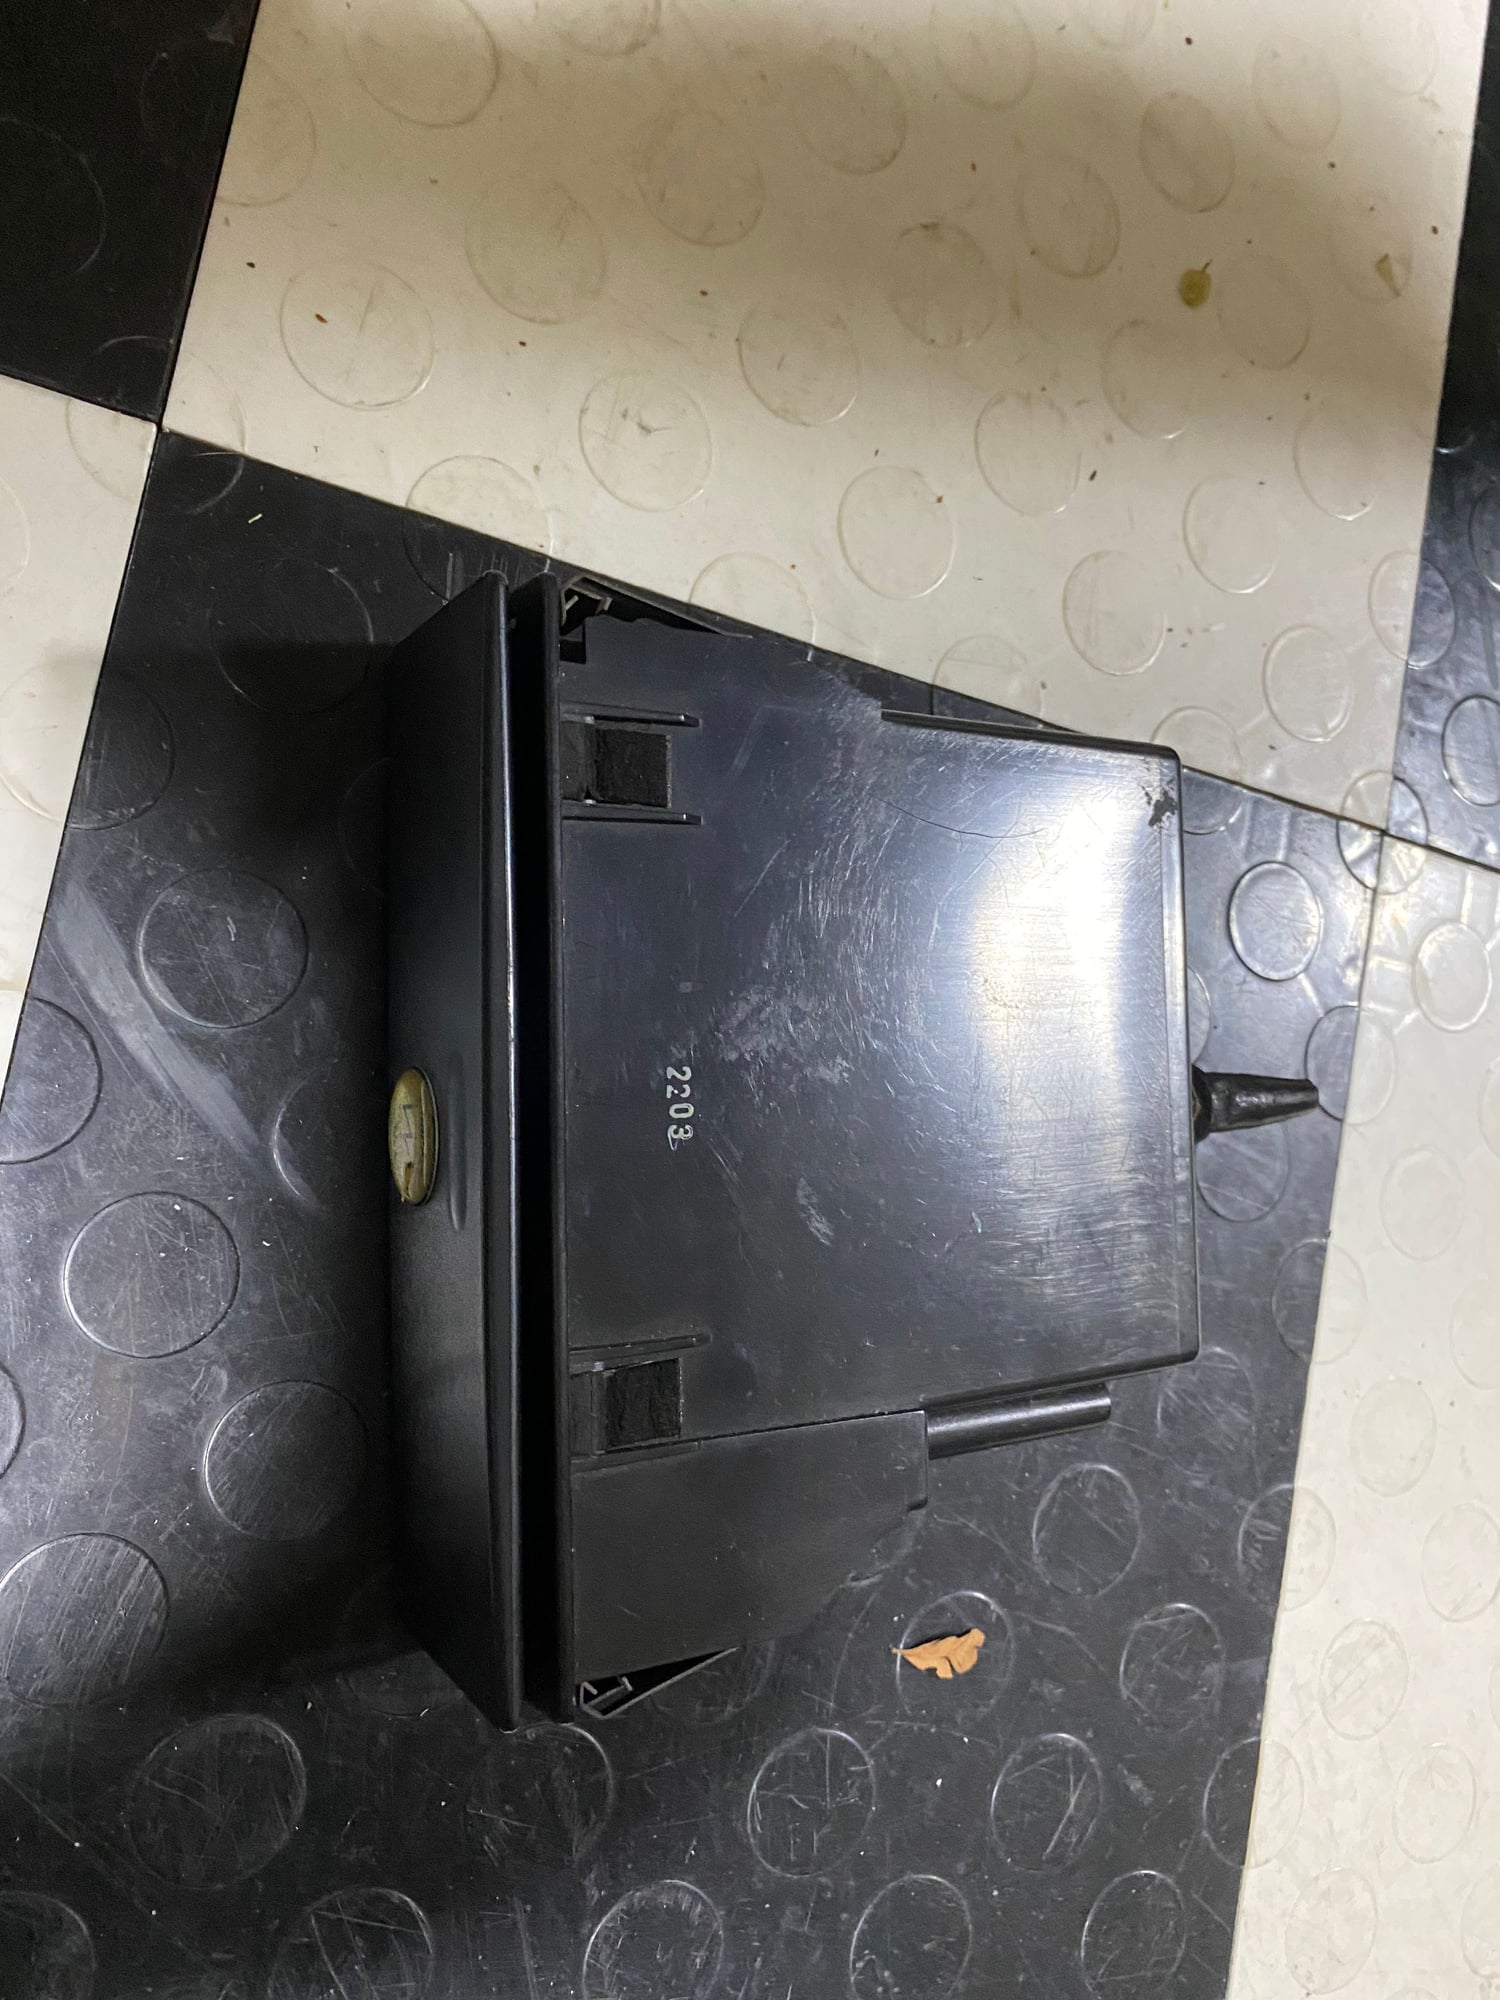 Interior/Upholstery - Storage bin under radio - Used - 1993 to 1995 Mazda RX-7 - Lantana, TX 76226, United States